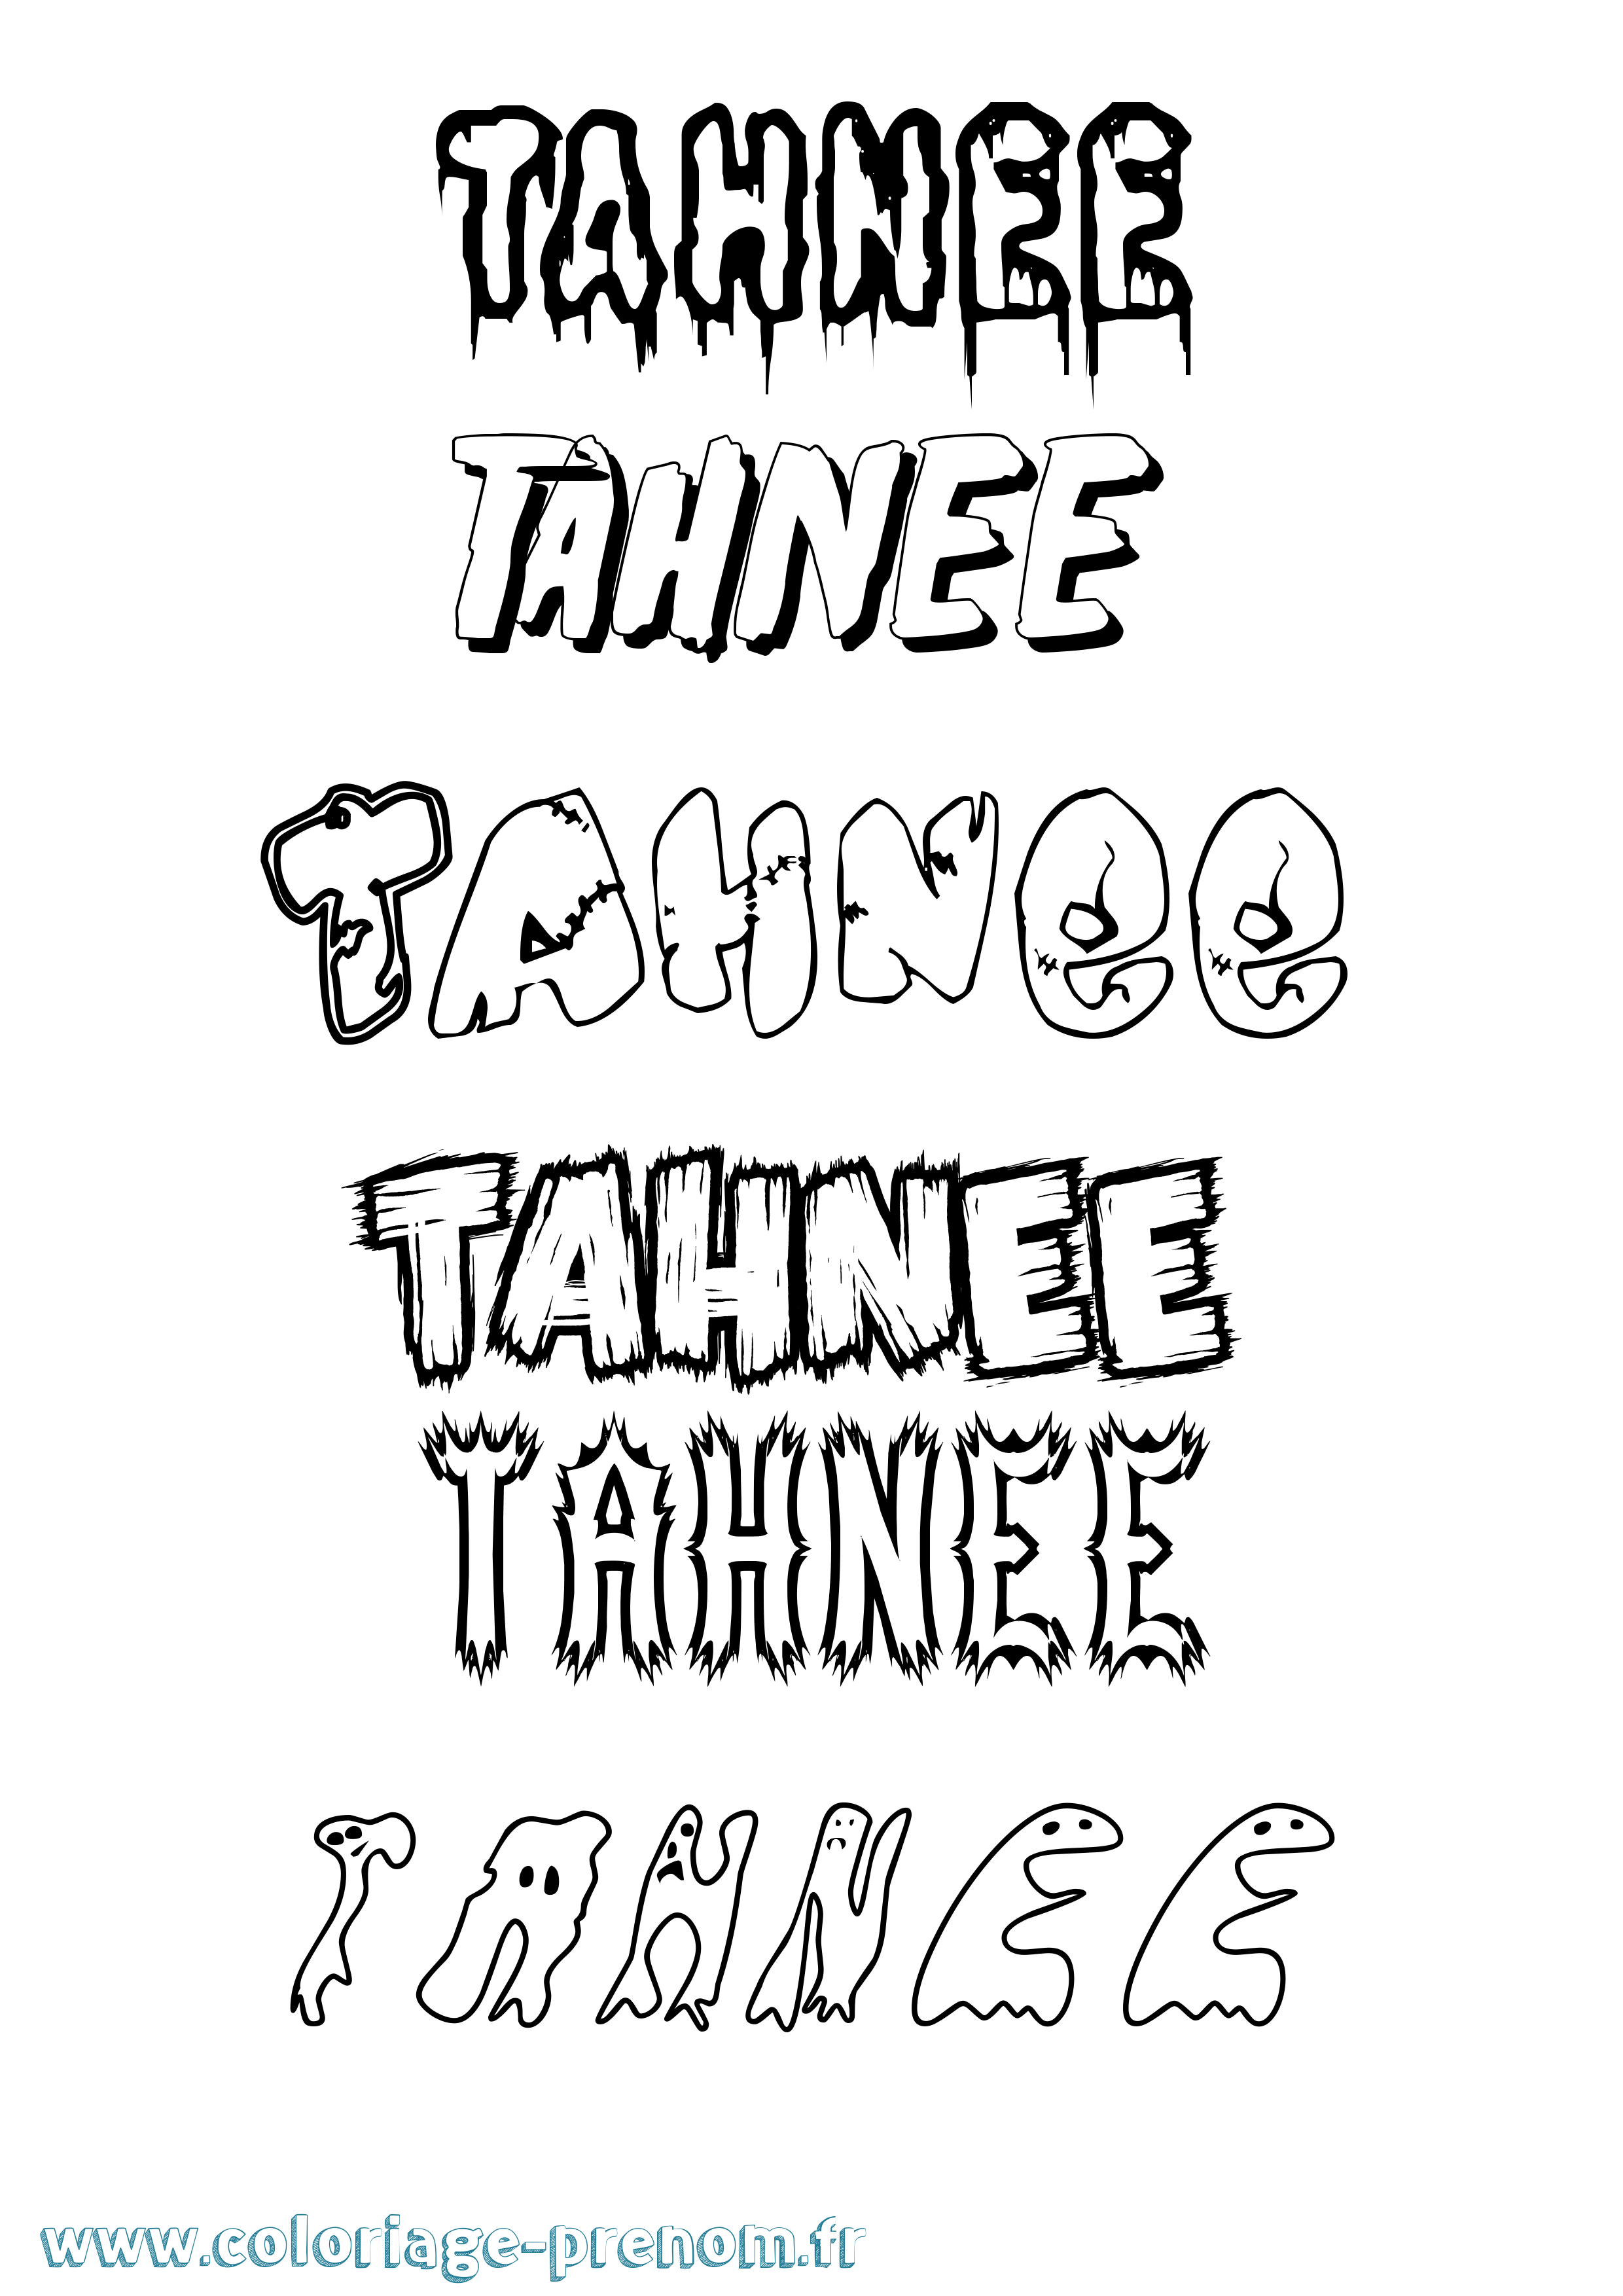 Coloriage prénom Tahnee Frisson